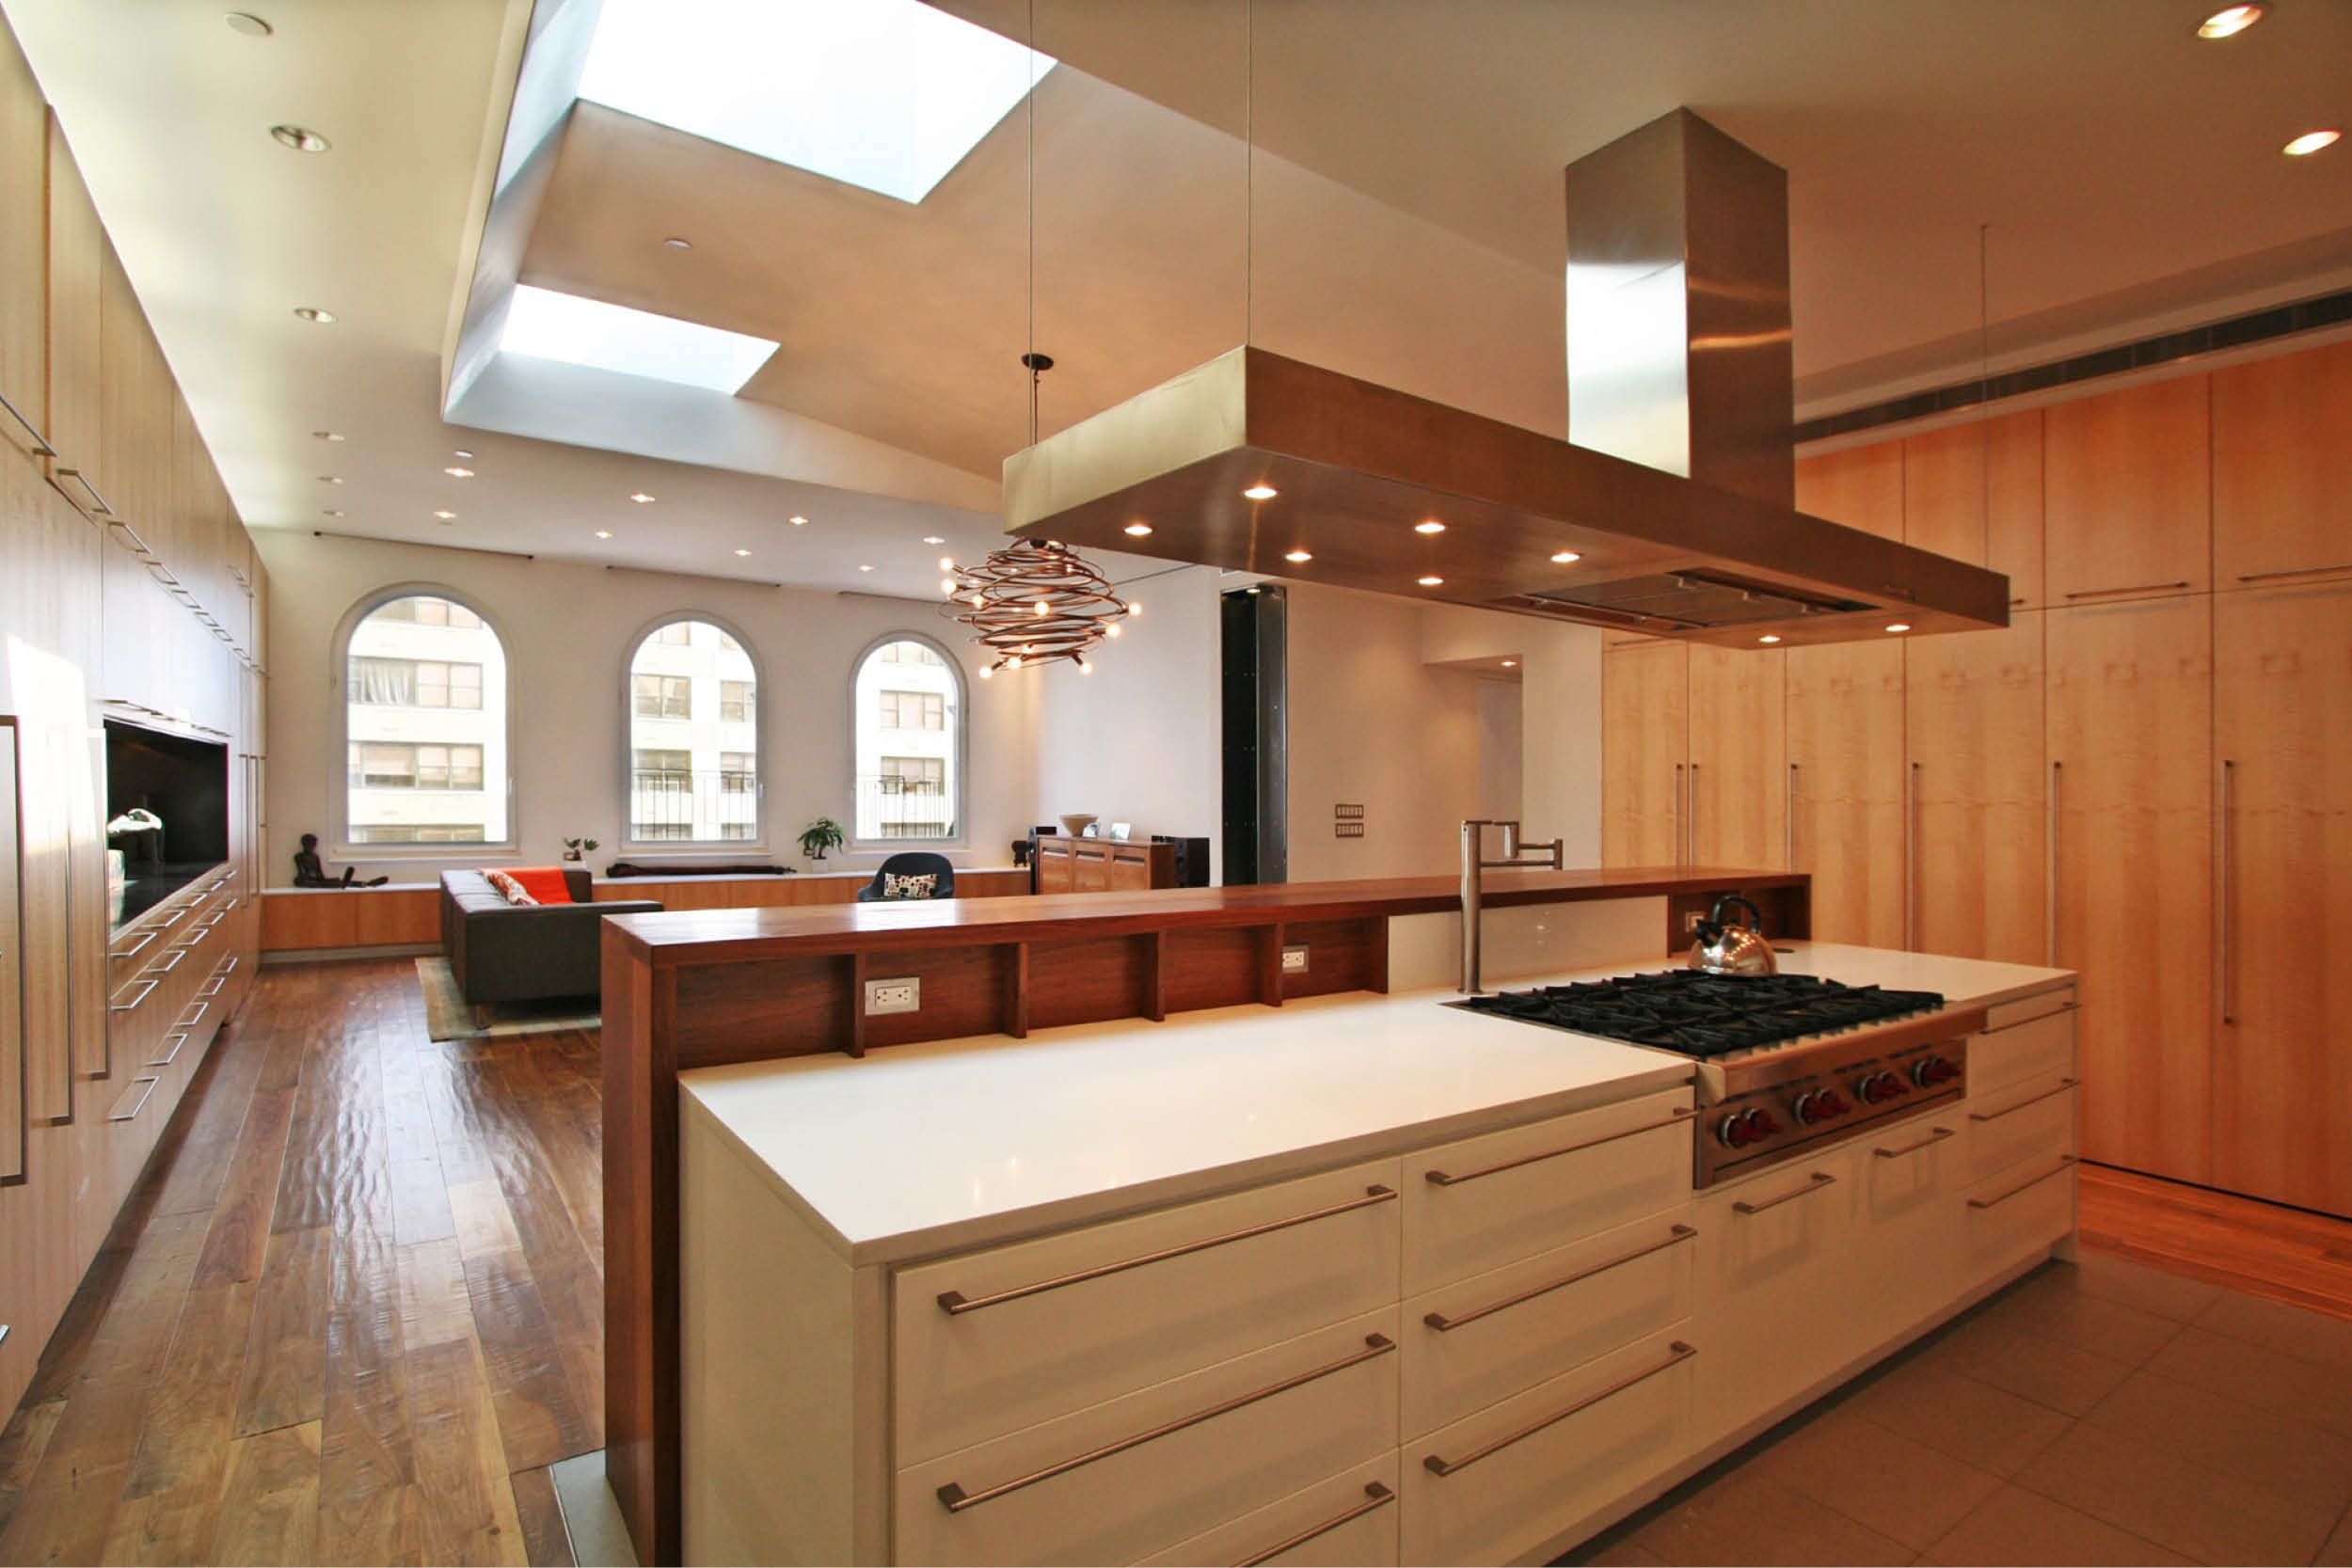 Loft Apartment Renovation | Union Square New York City 14th Street | Kitchen Built In Custom Cabinets Island Skylights | RES4